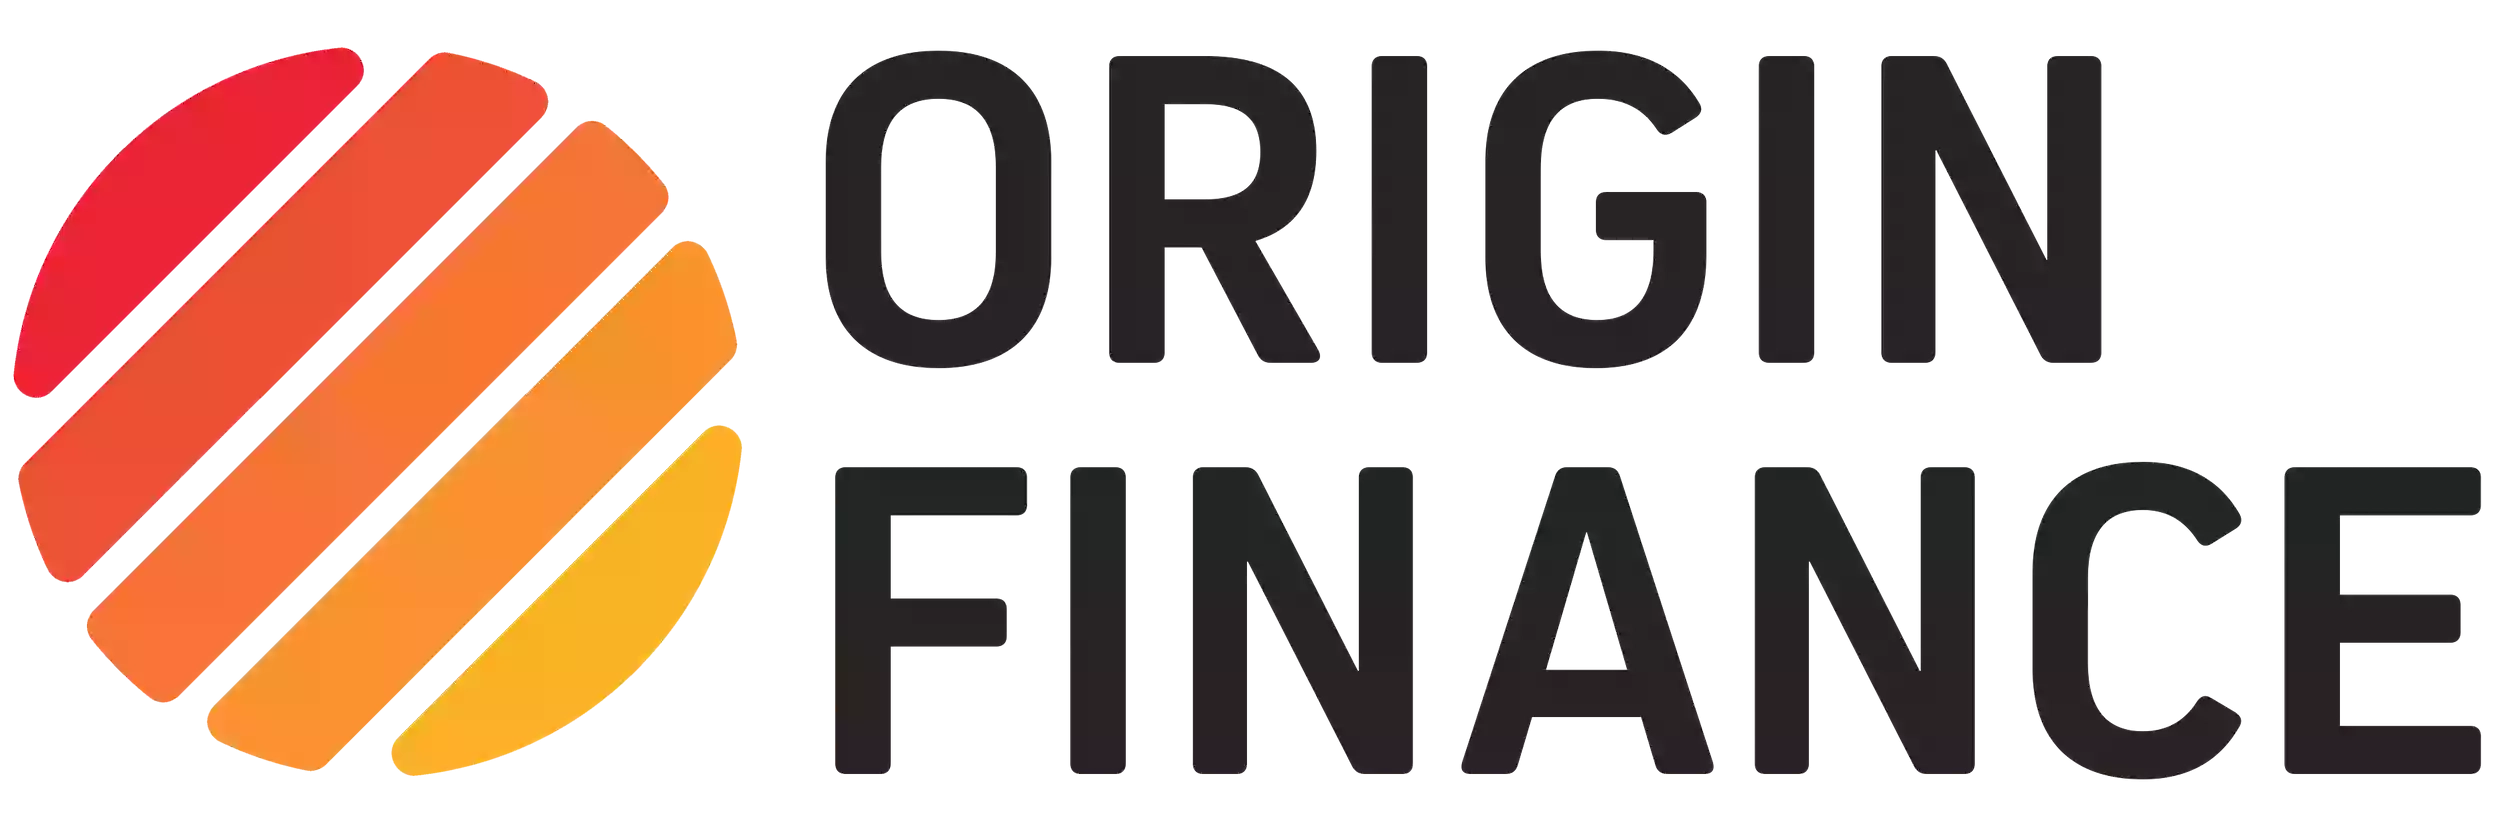 Origin Finance | Recovery Loan Scheme | Equipment Finance, Business Loans, Hire Purchase & More